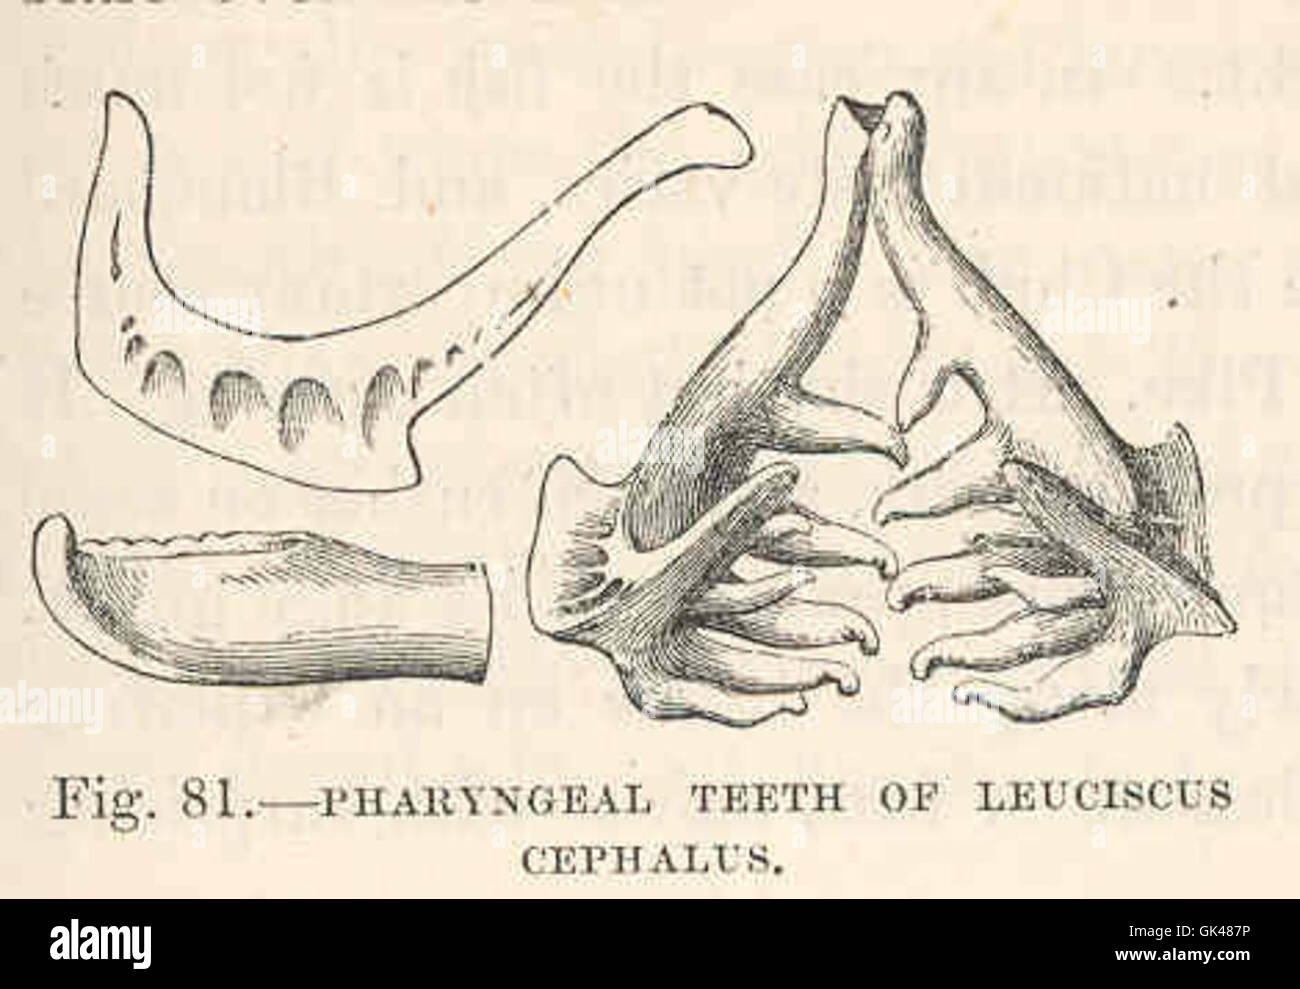 48049 Pharyngeal Teeth of Leuciscus cephalus Stock Photo